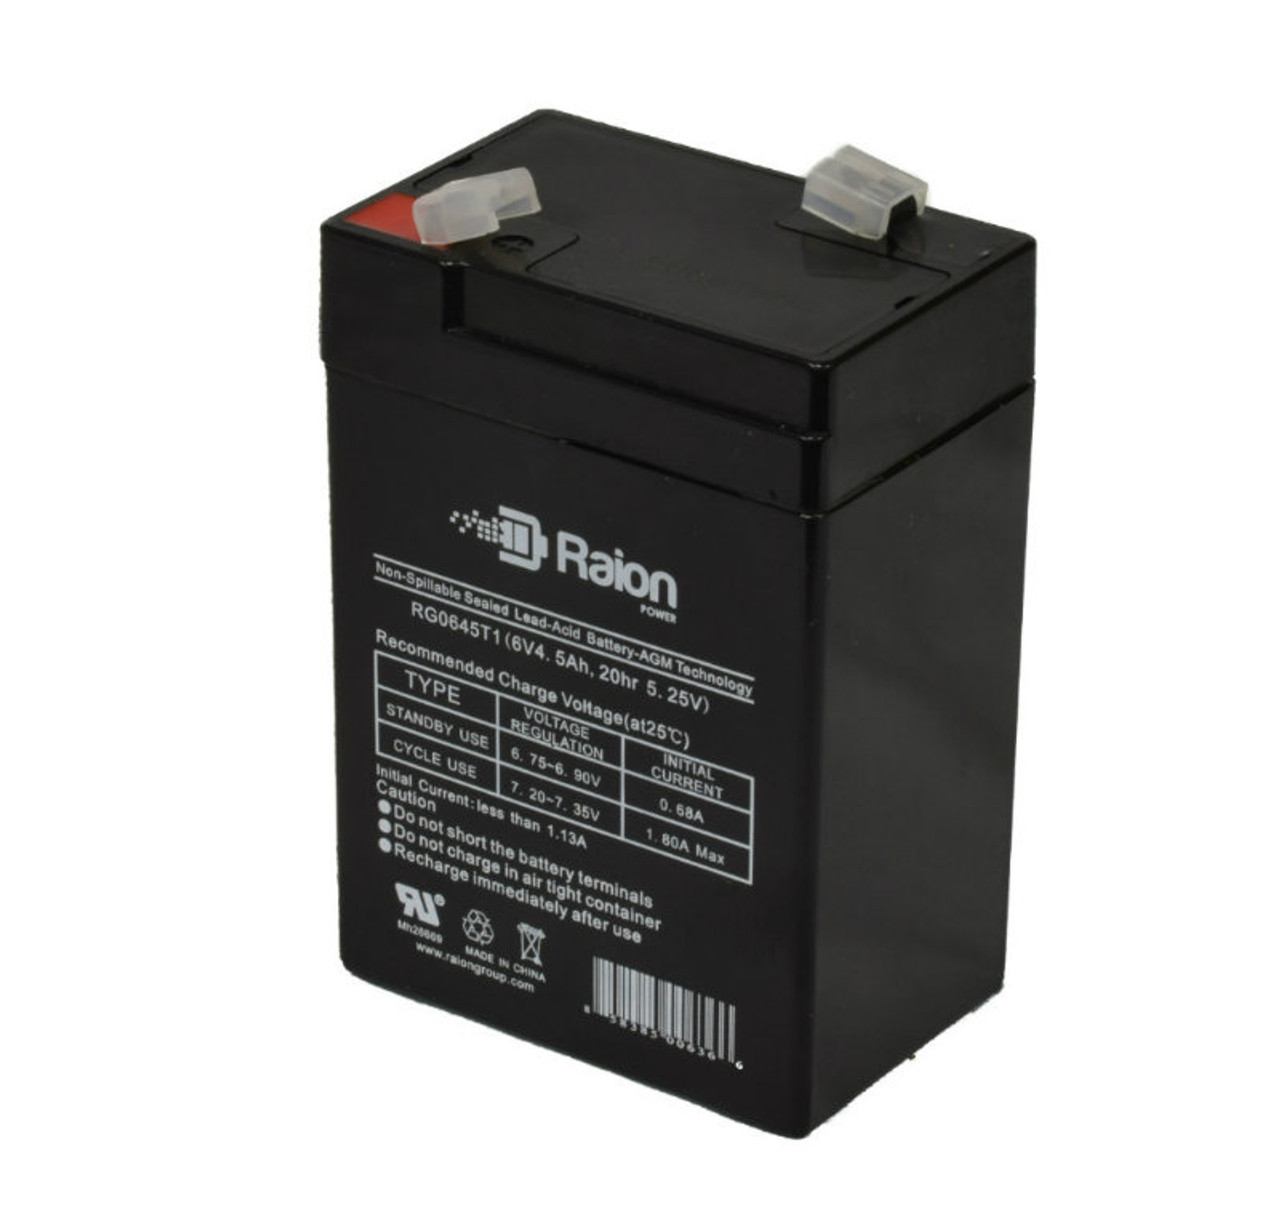 Raion Power RG0645T1 6V 4.5Ah Replacement Battery Cartridge for Yuasa NP5-6